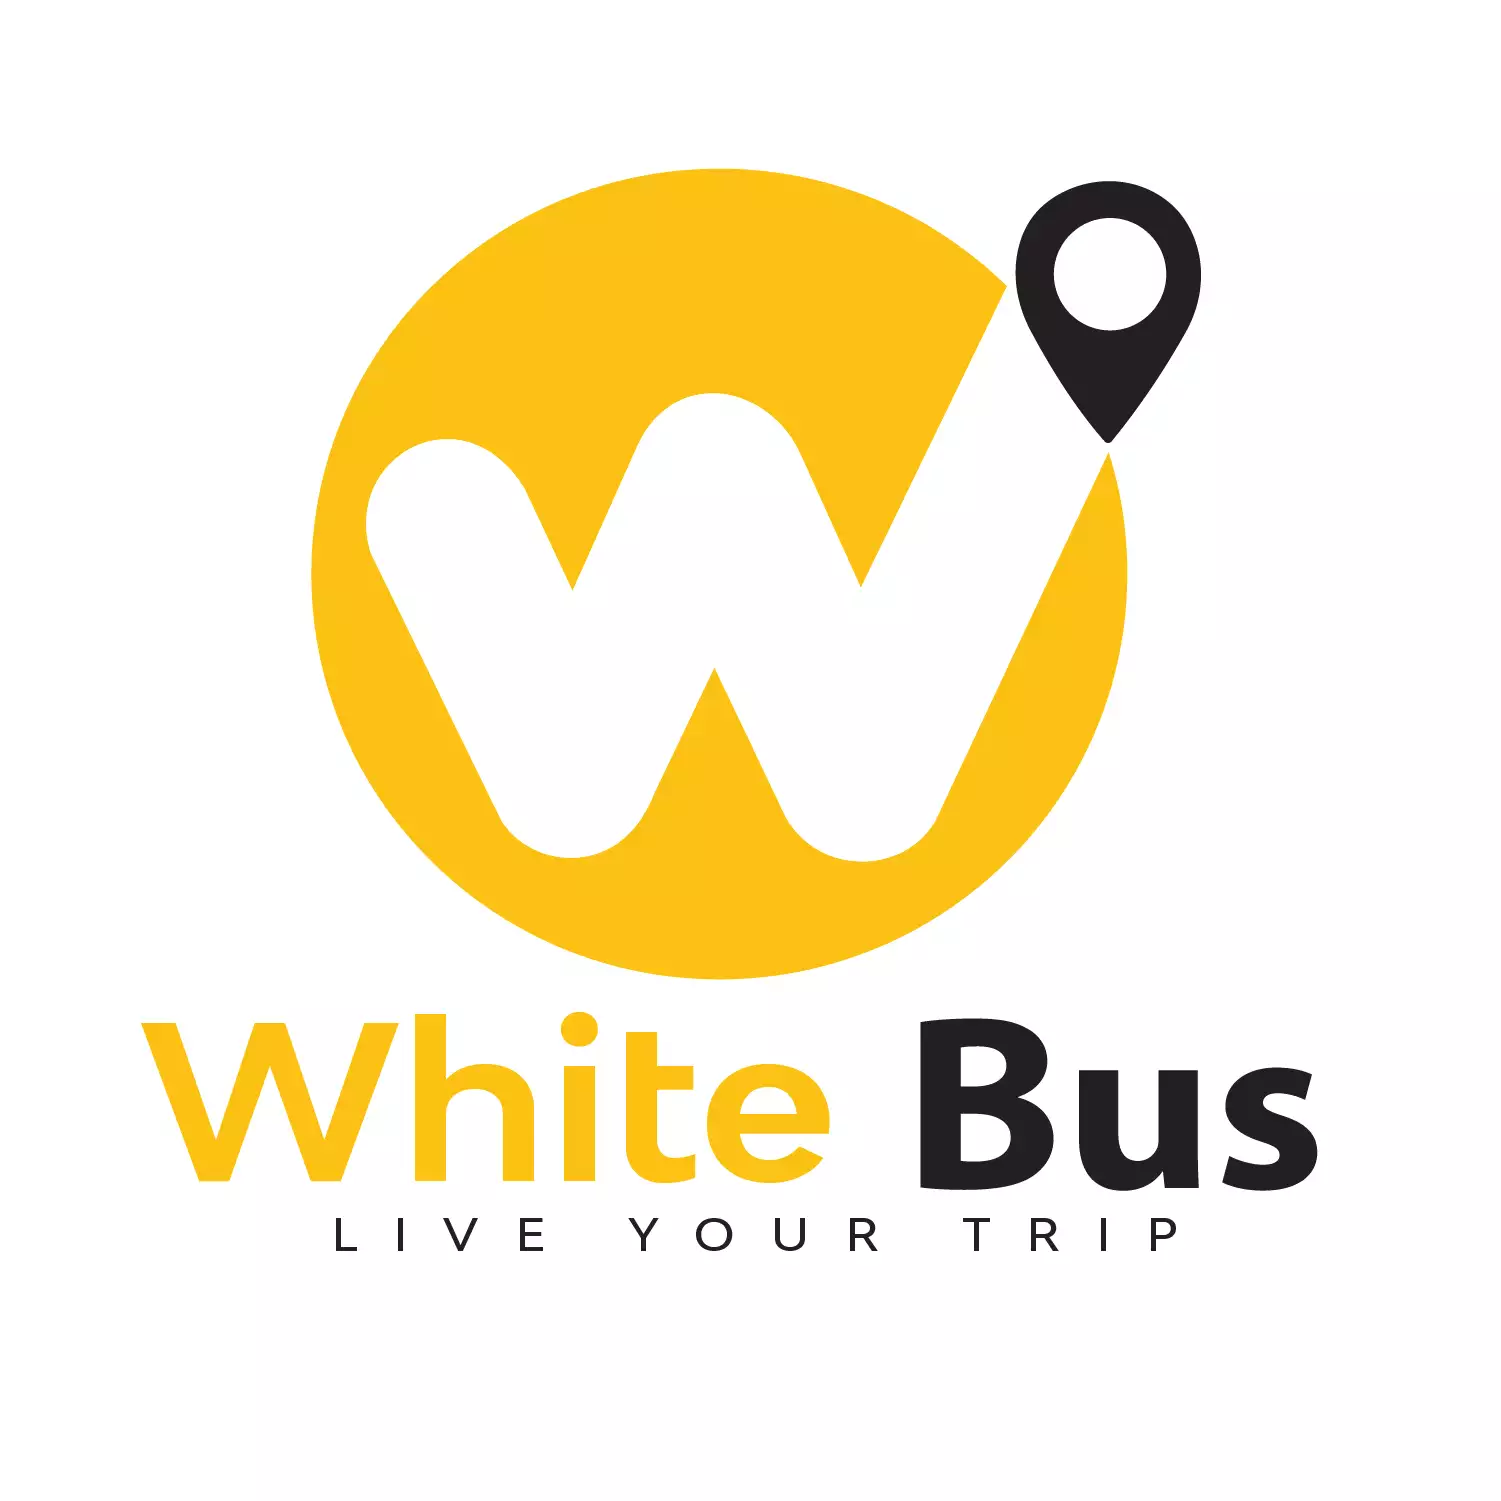 White bus hotline number, customer service, phone number